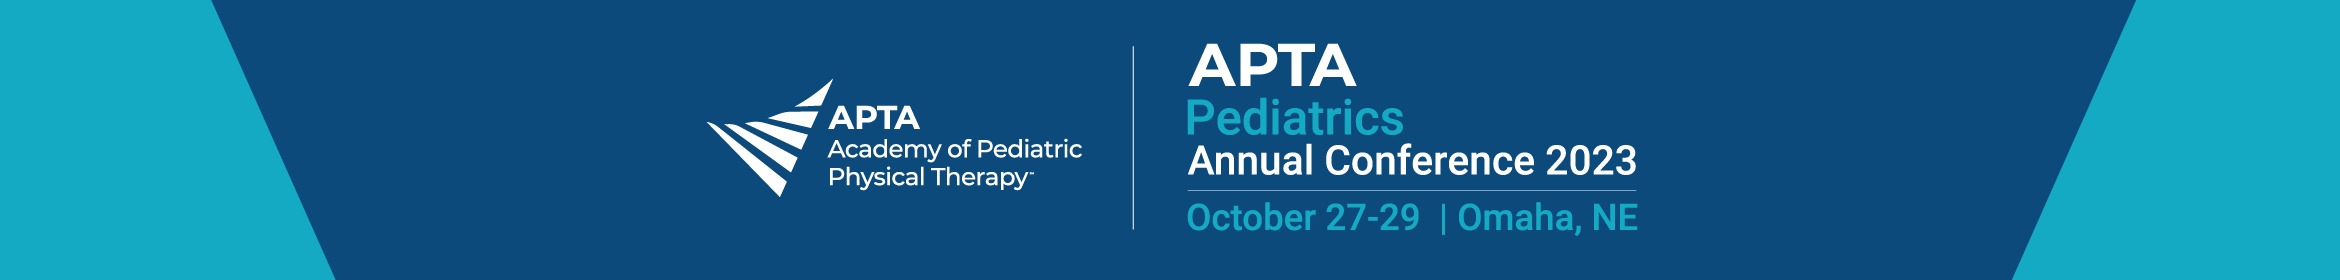 APTA Pediatrics Annual Conference 2023 Main banner